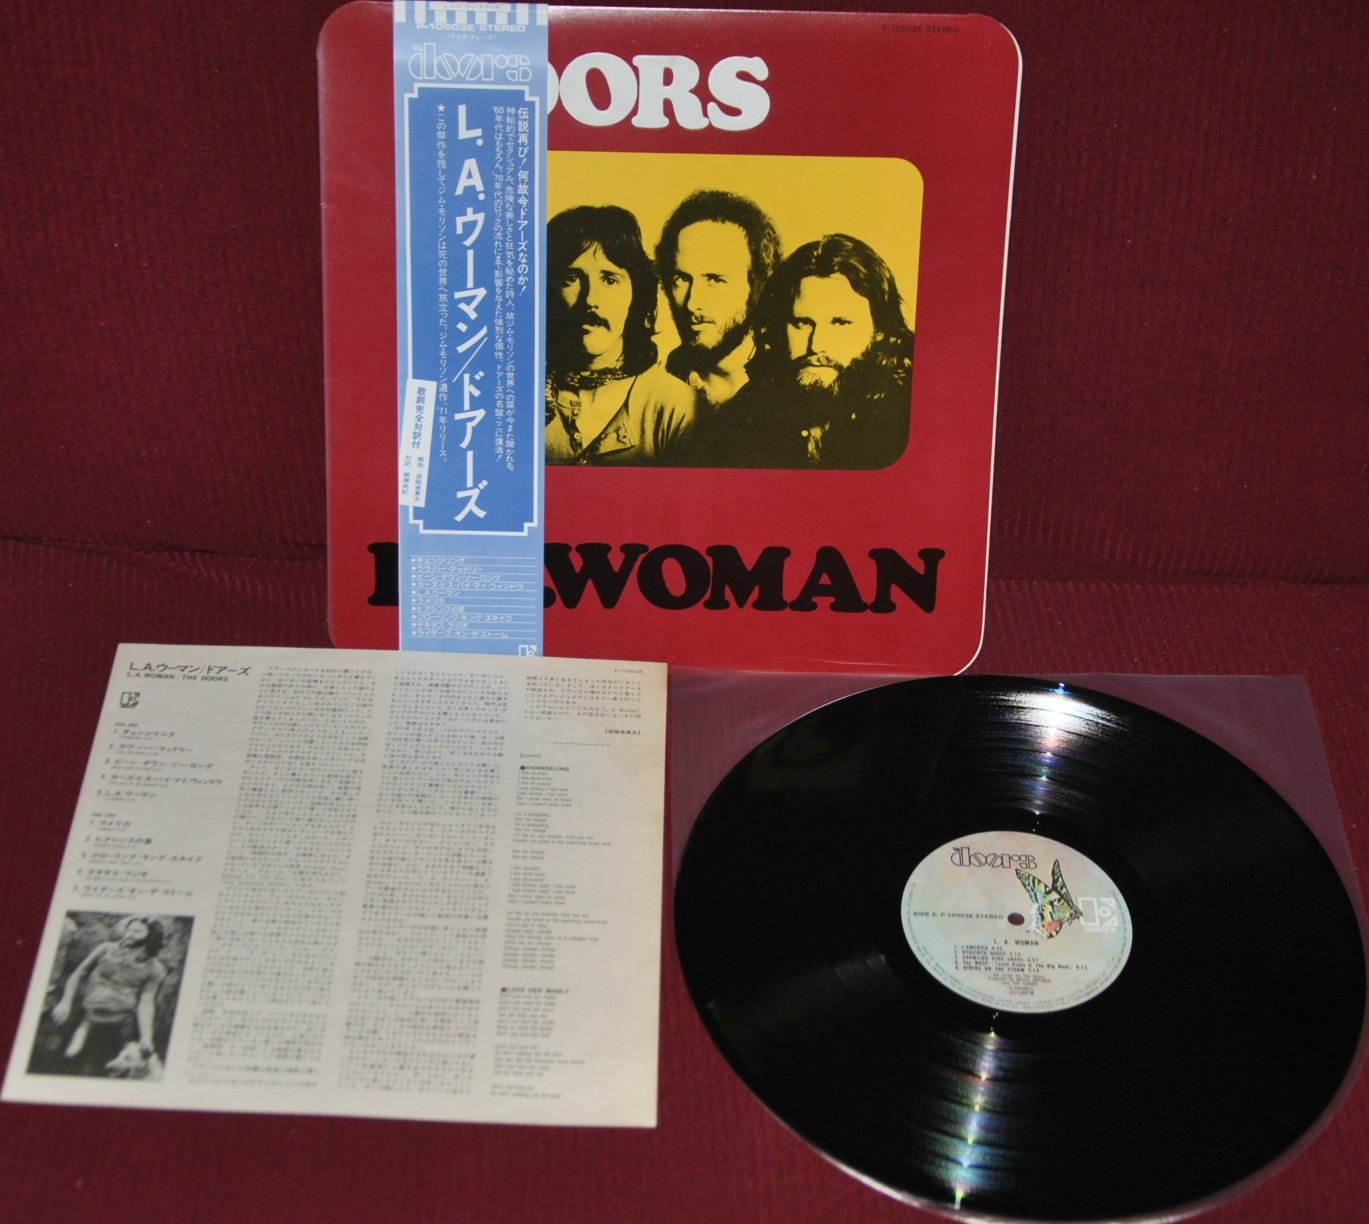 THE DOORS – L. A. WOMAN – ELEKTRA P-10503E 1978 – LP JAPAN OBI NM

LP EDIZIONE G…